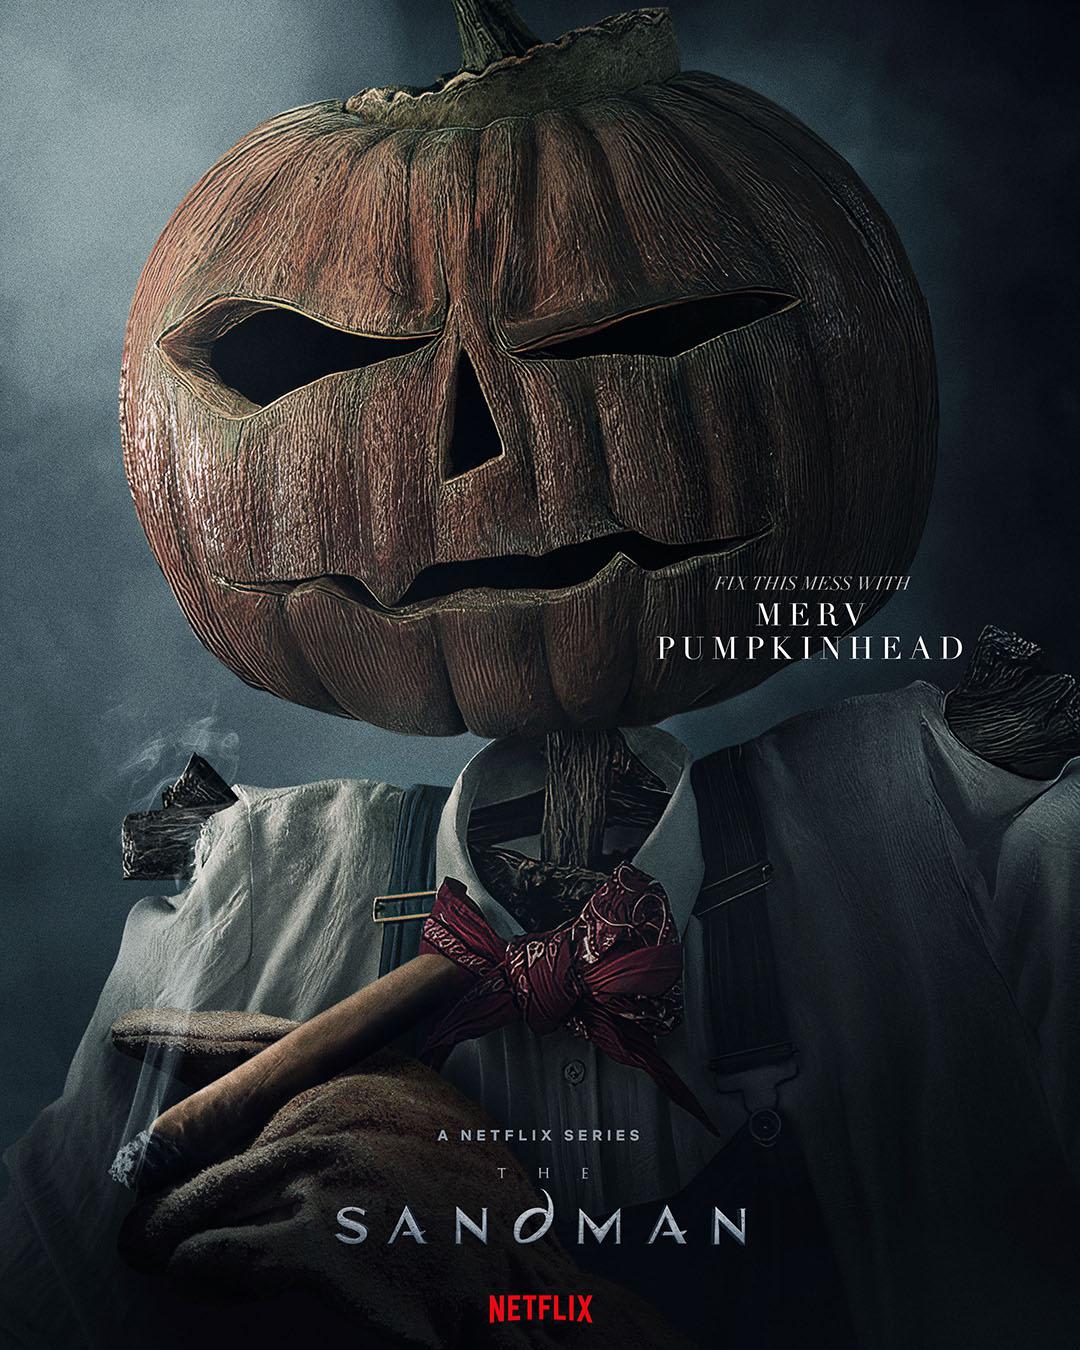 [Film/TV] THE SANDMAN poster. Featuring Merv Pumpkinhead (Mark Hamill)